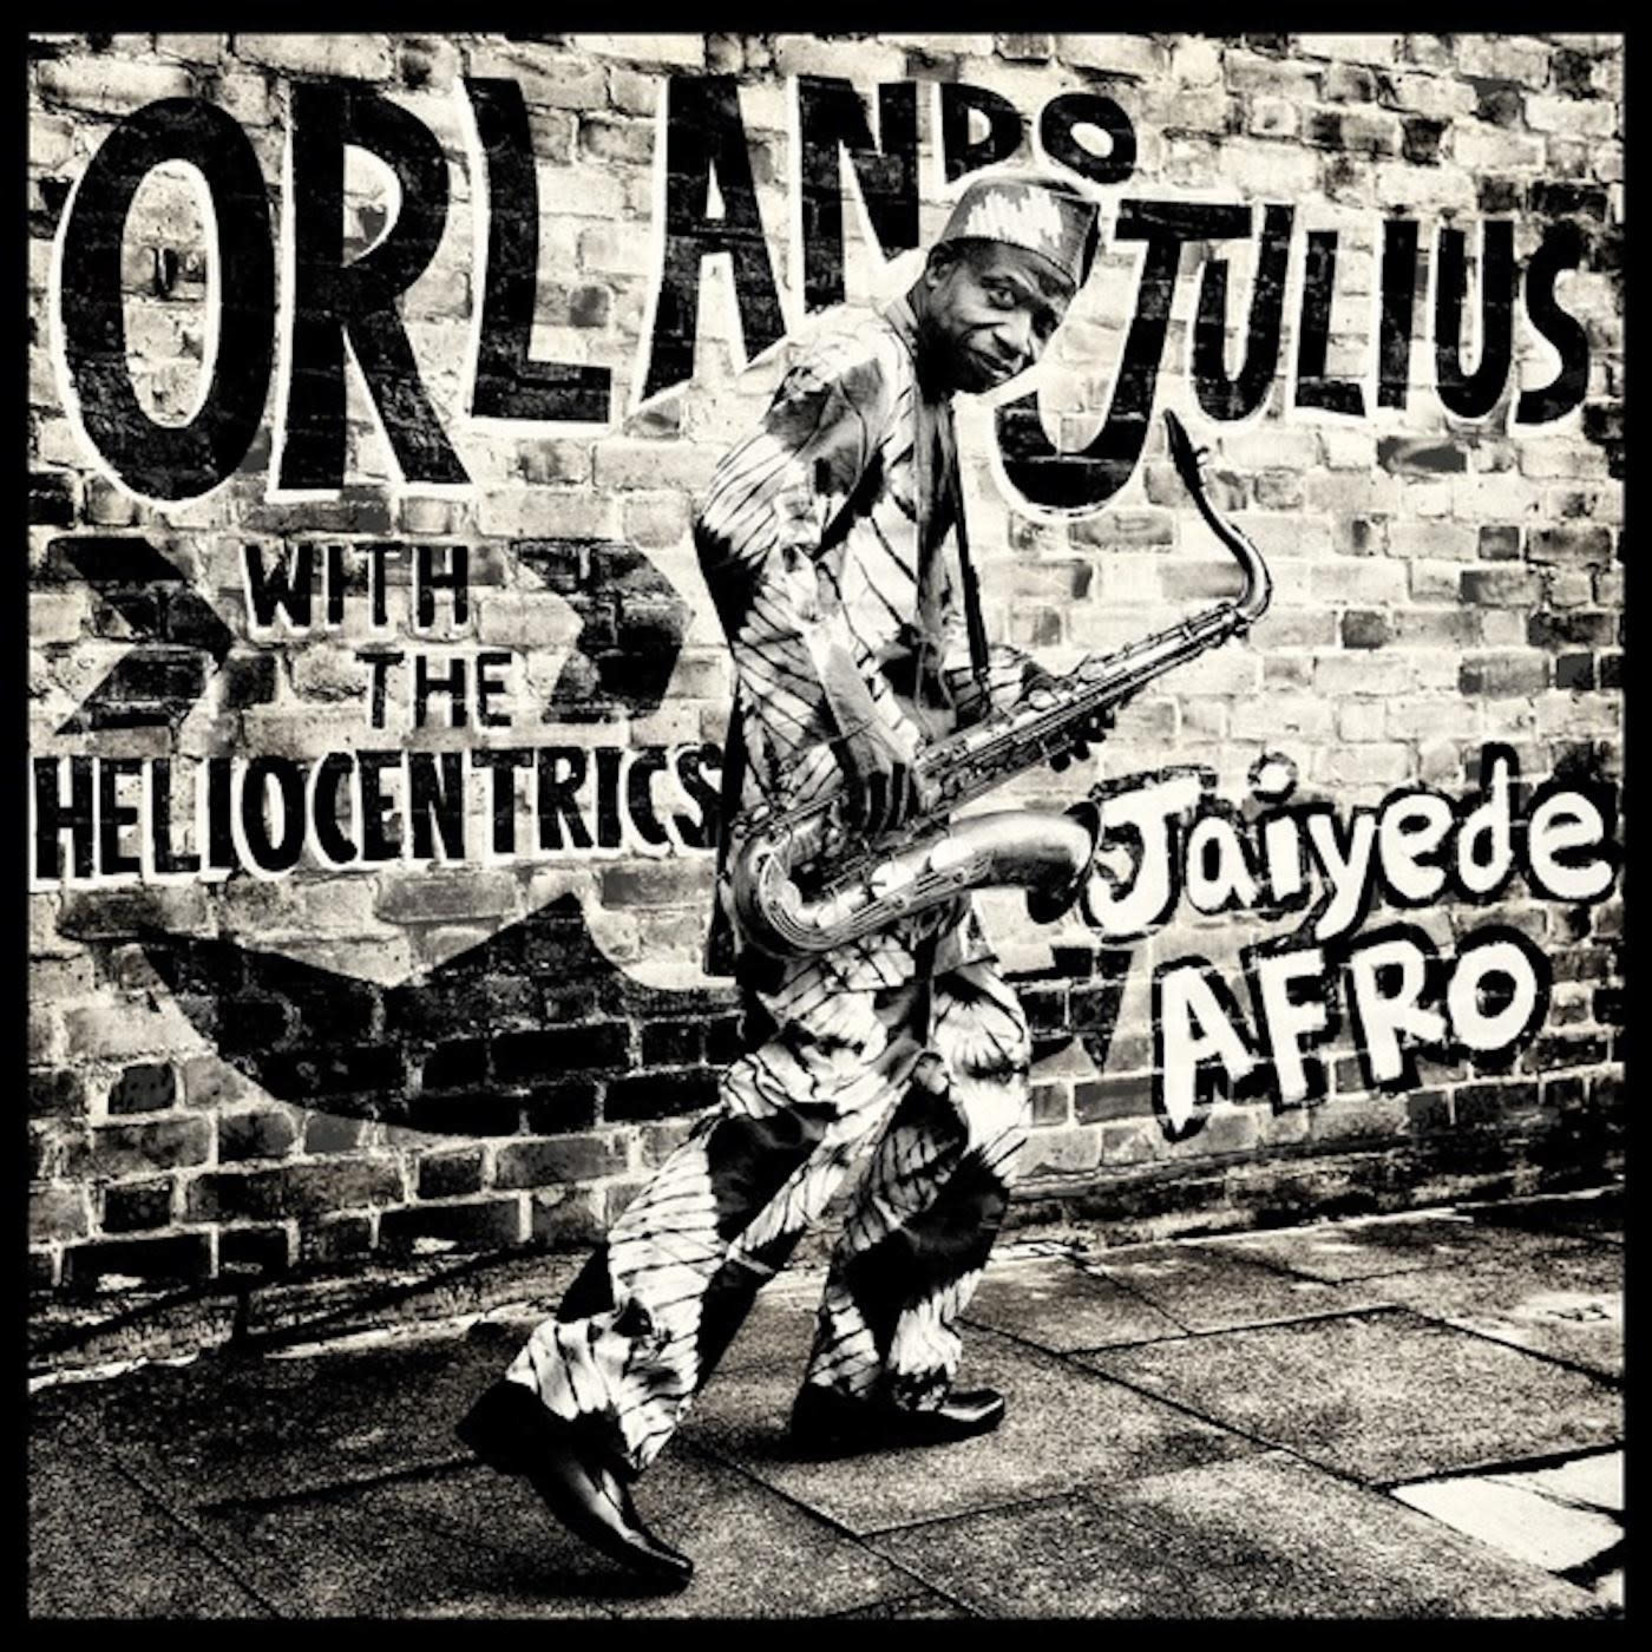 Strut Orlando Julius & The Heliocentrics - Jaiyede Afro (LP) [Clear]